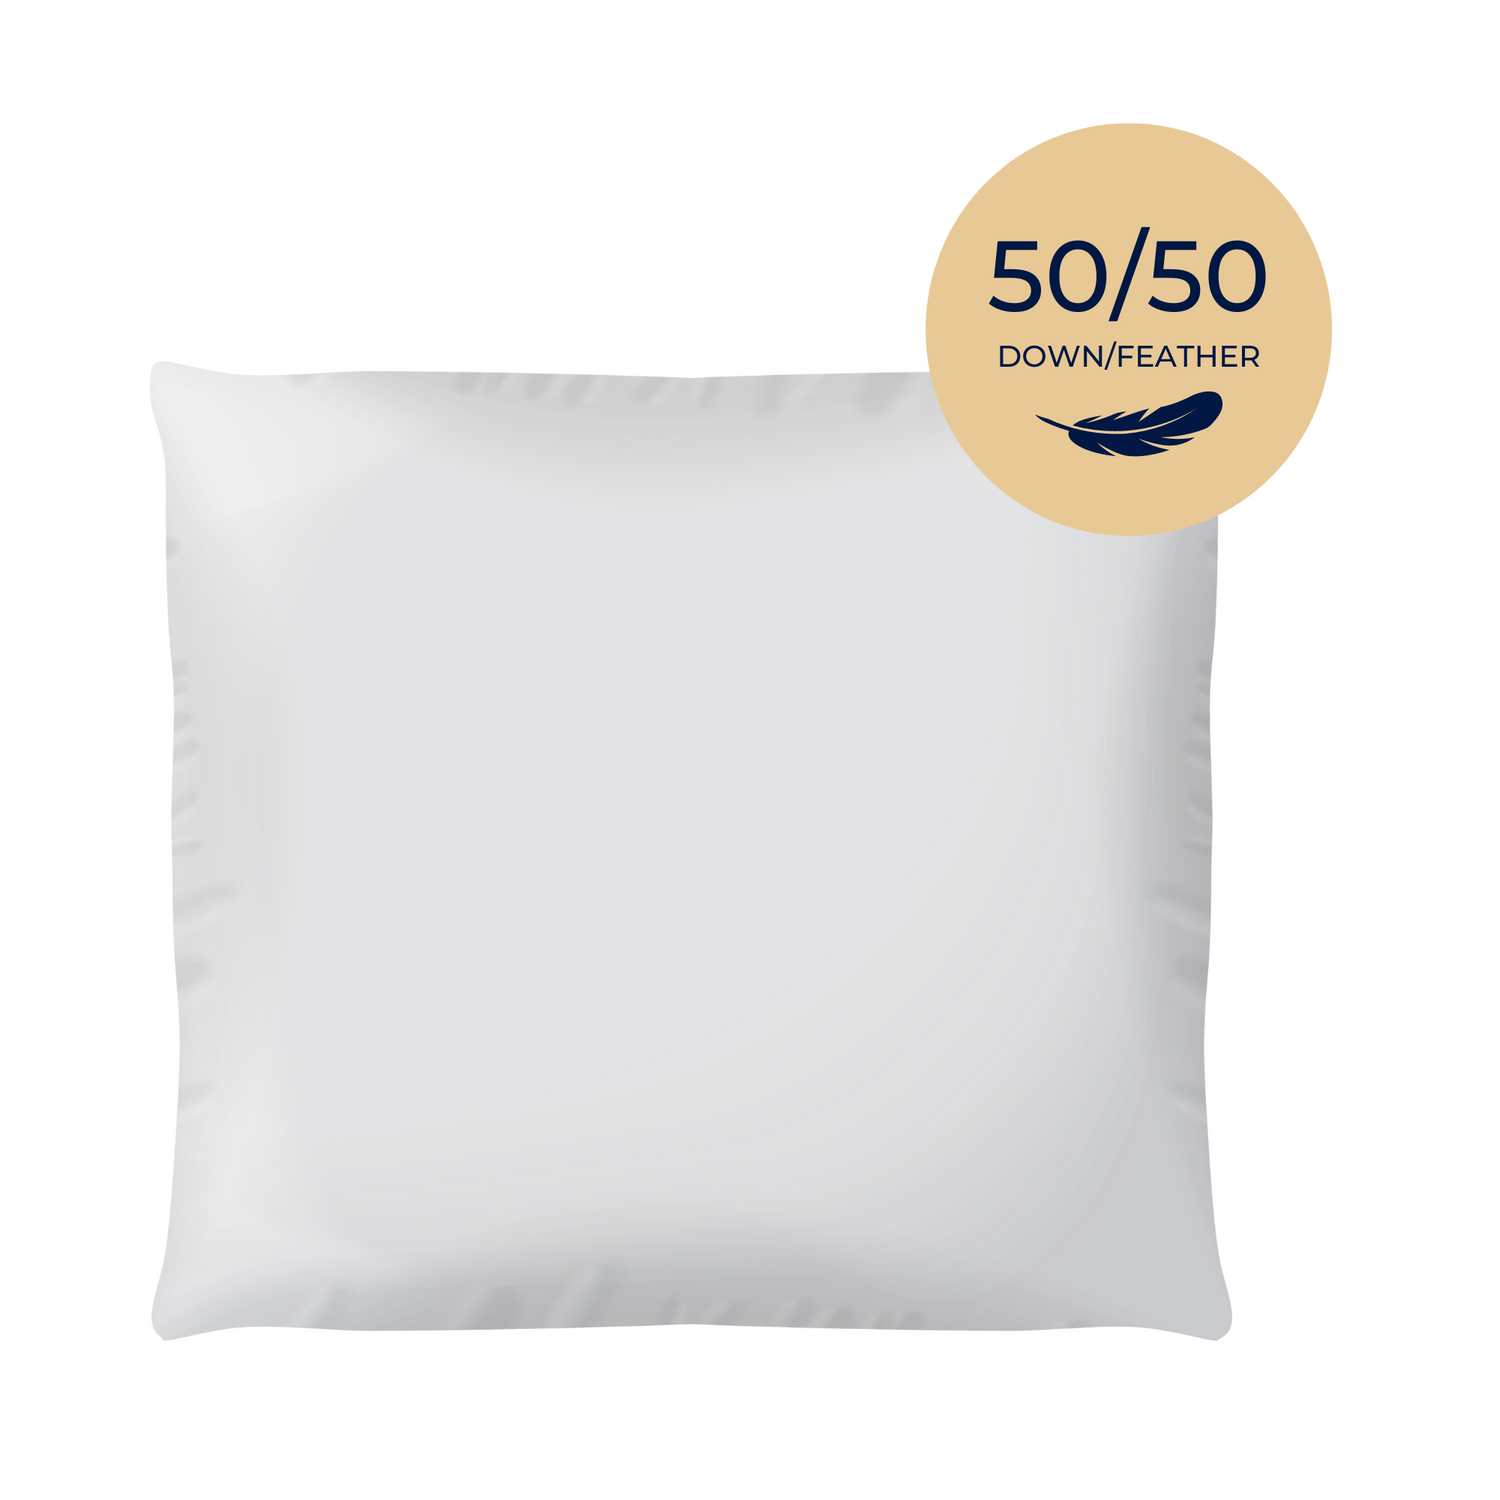 28" x 28" Decorative Throw Pillow - American Comfort Luxury Linens